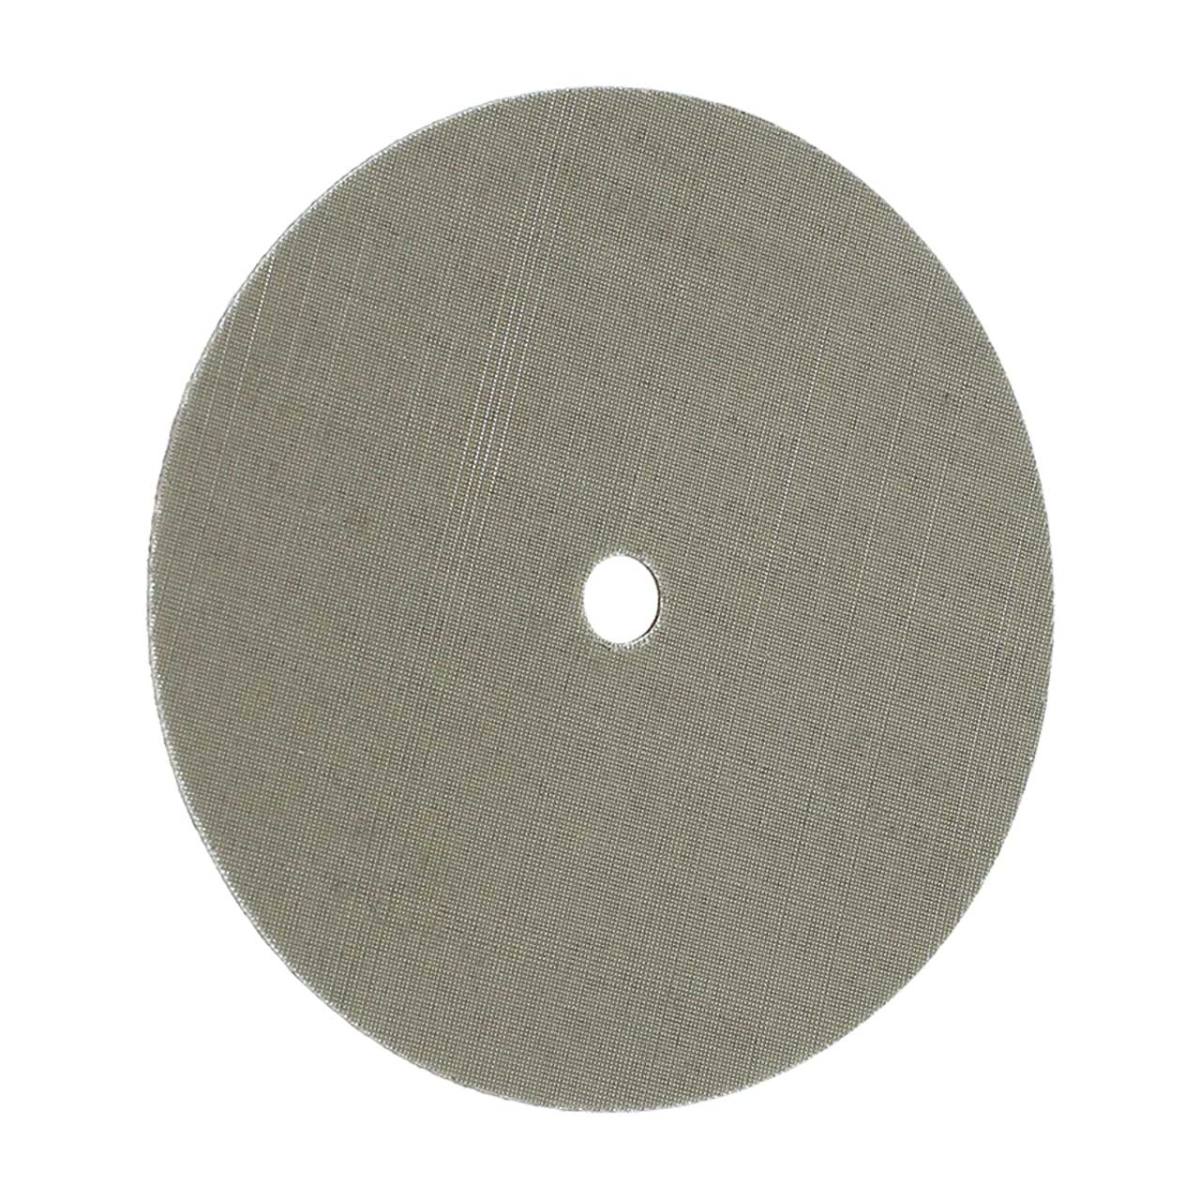 FIX KLETT Trizact disc, 115 mm x 10 mm, grain 280 / A 65, hook-and-loop fastener